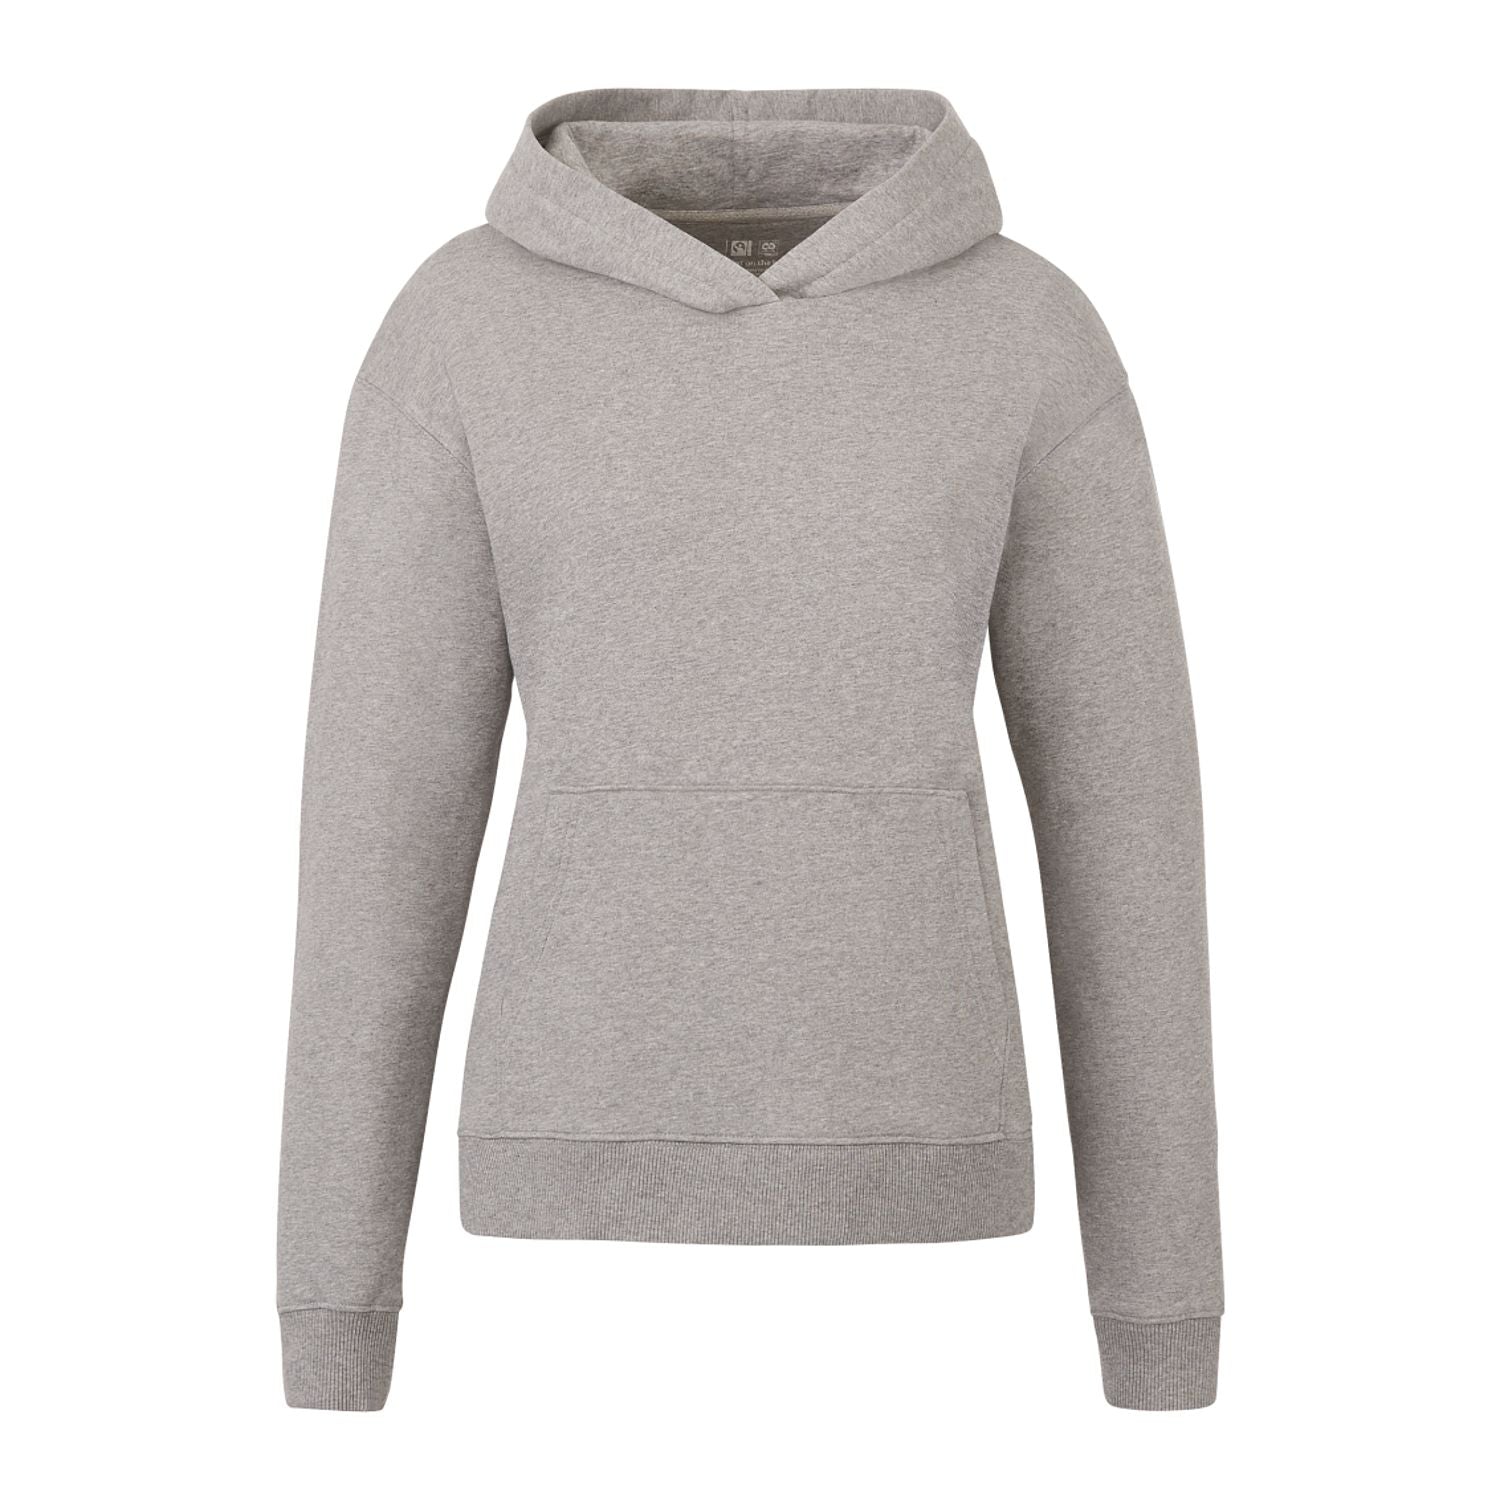 Customizable Tentree women's organic cotton classic hoodie in heather gray.